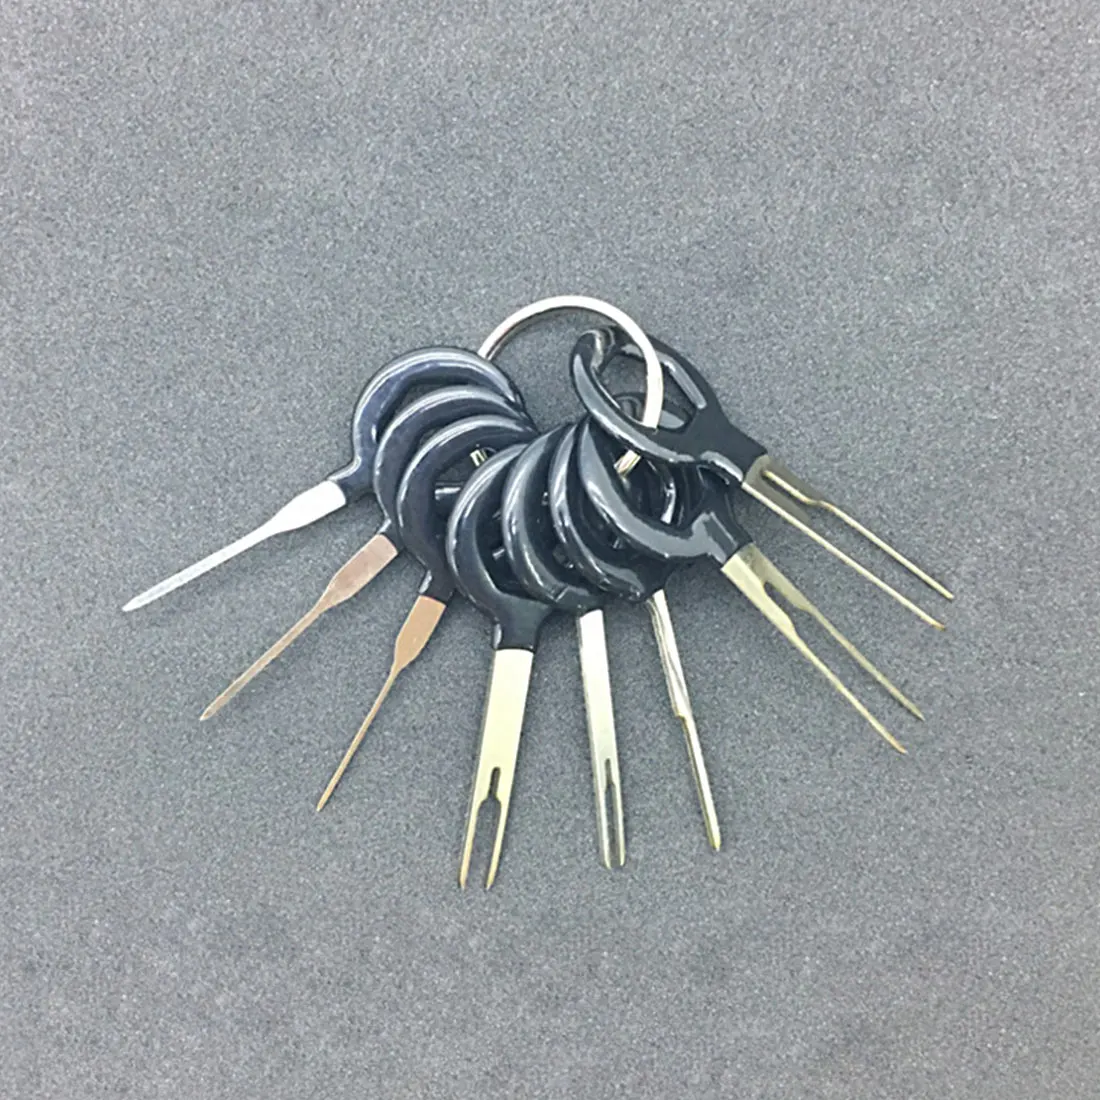 18Pcs 11Pcs Automotive Plug Terminal Remove Tool Set Key Pin Car Electrical Wire Crimp Connector Extractor Kit Accessories